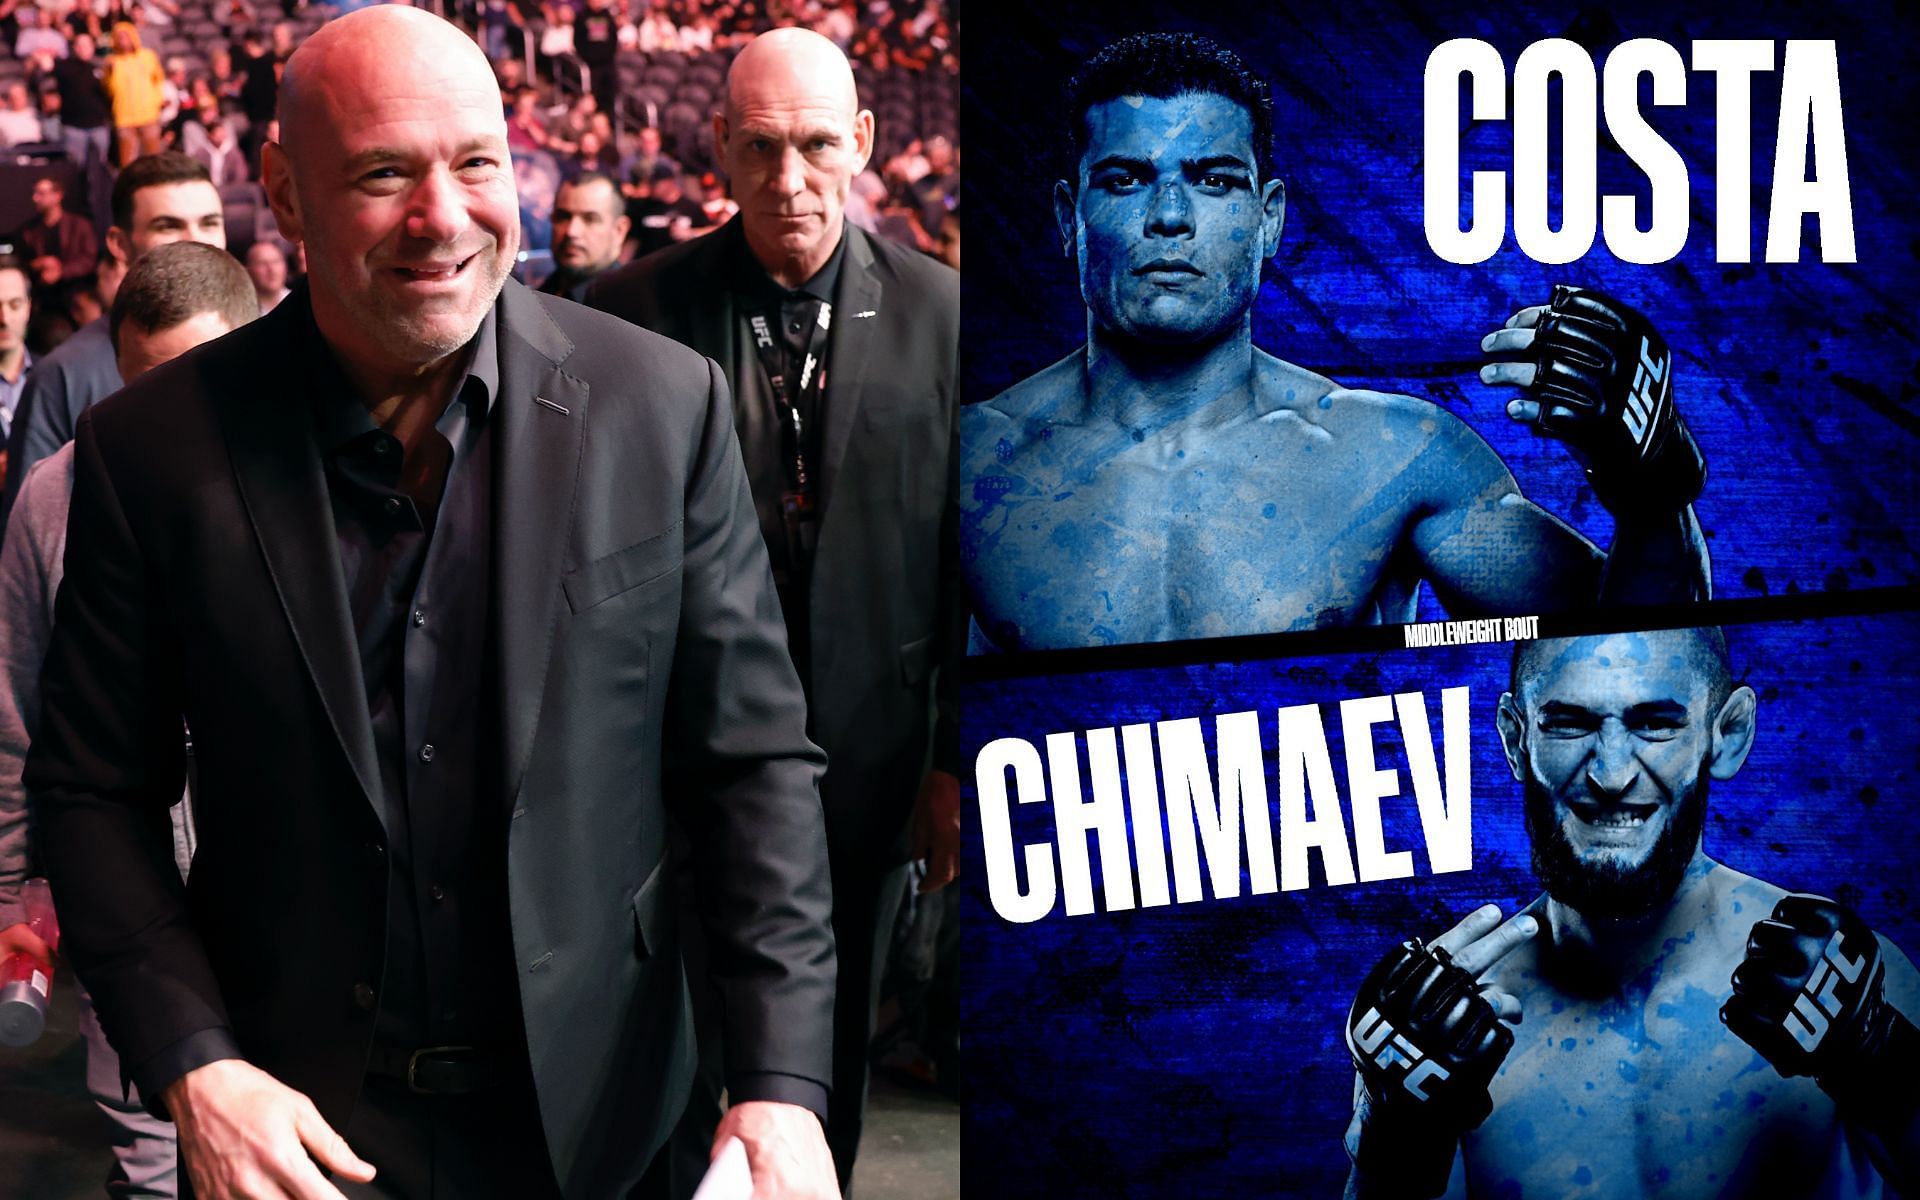 Dana White and Paulo Costa vs. Khamzat Chimaev poster [Image credits: Getty Images and @MMAfalcon on X] 